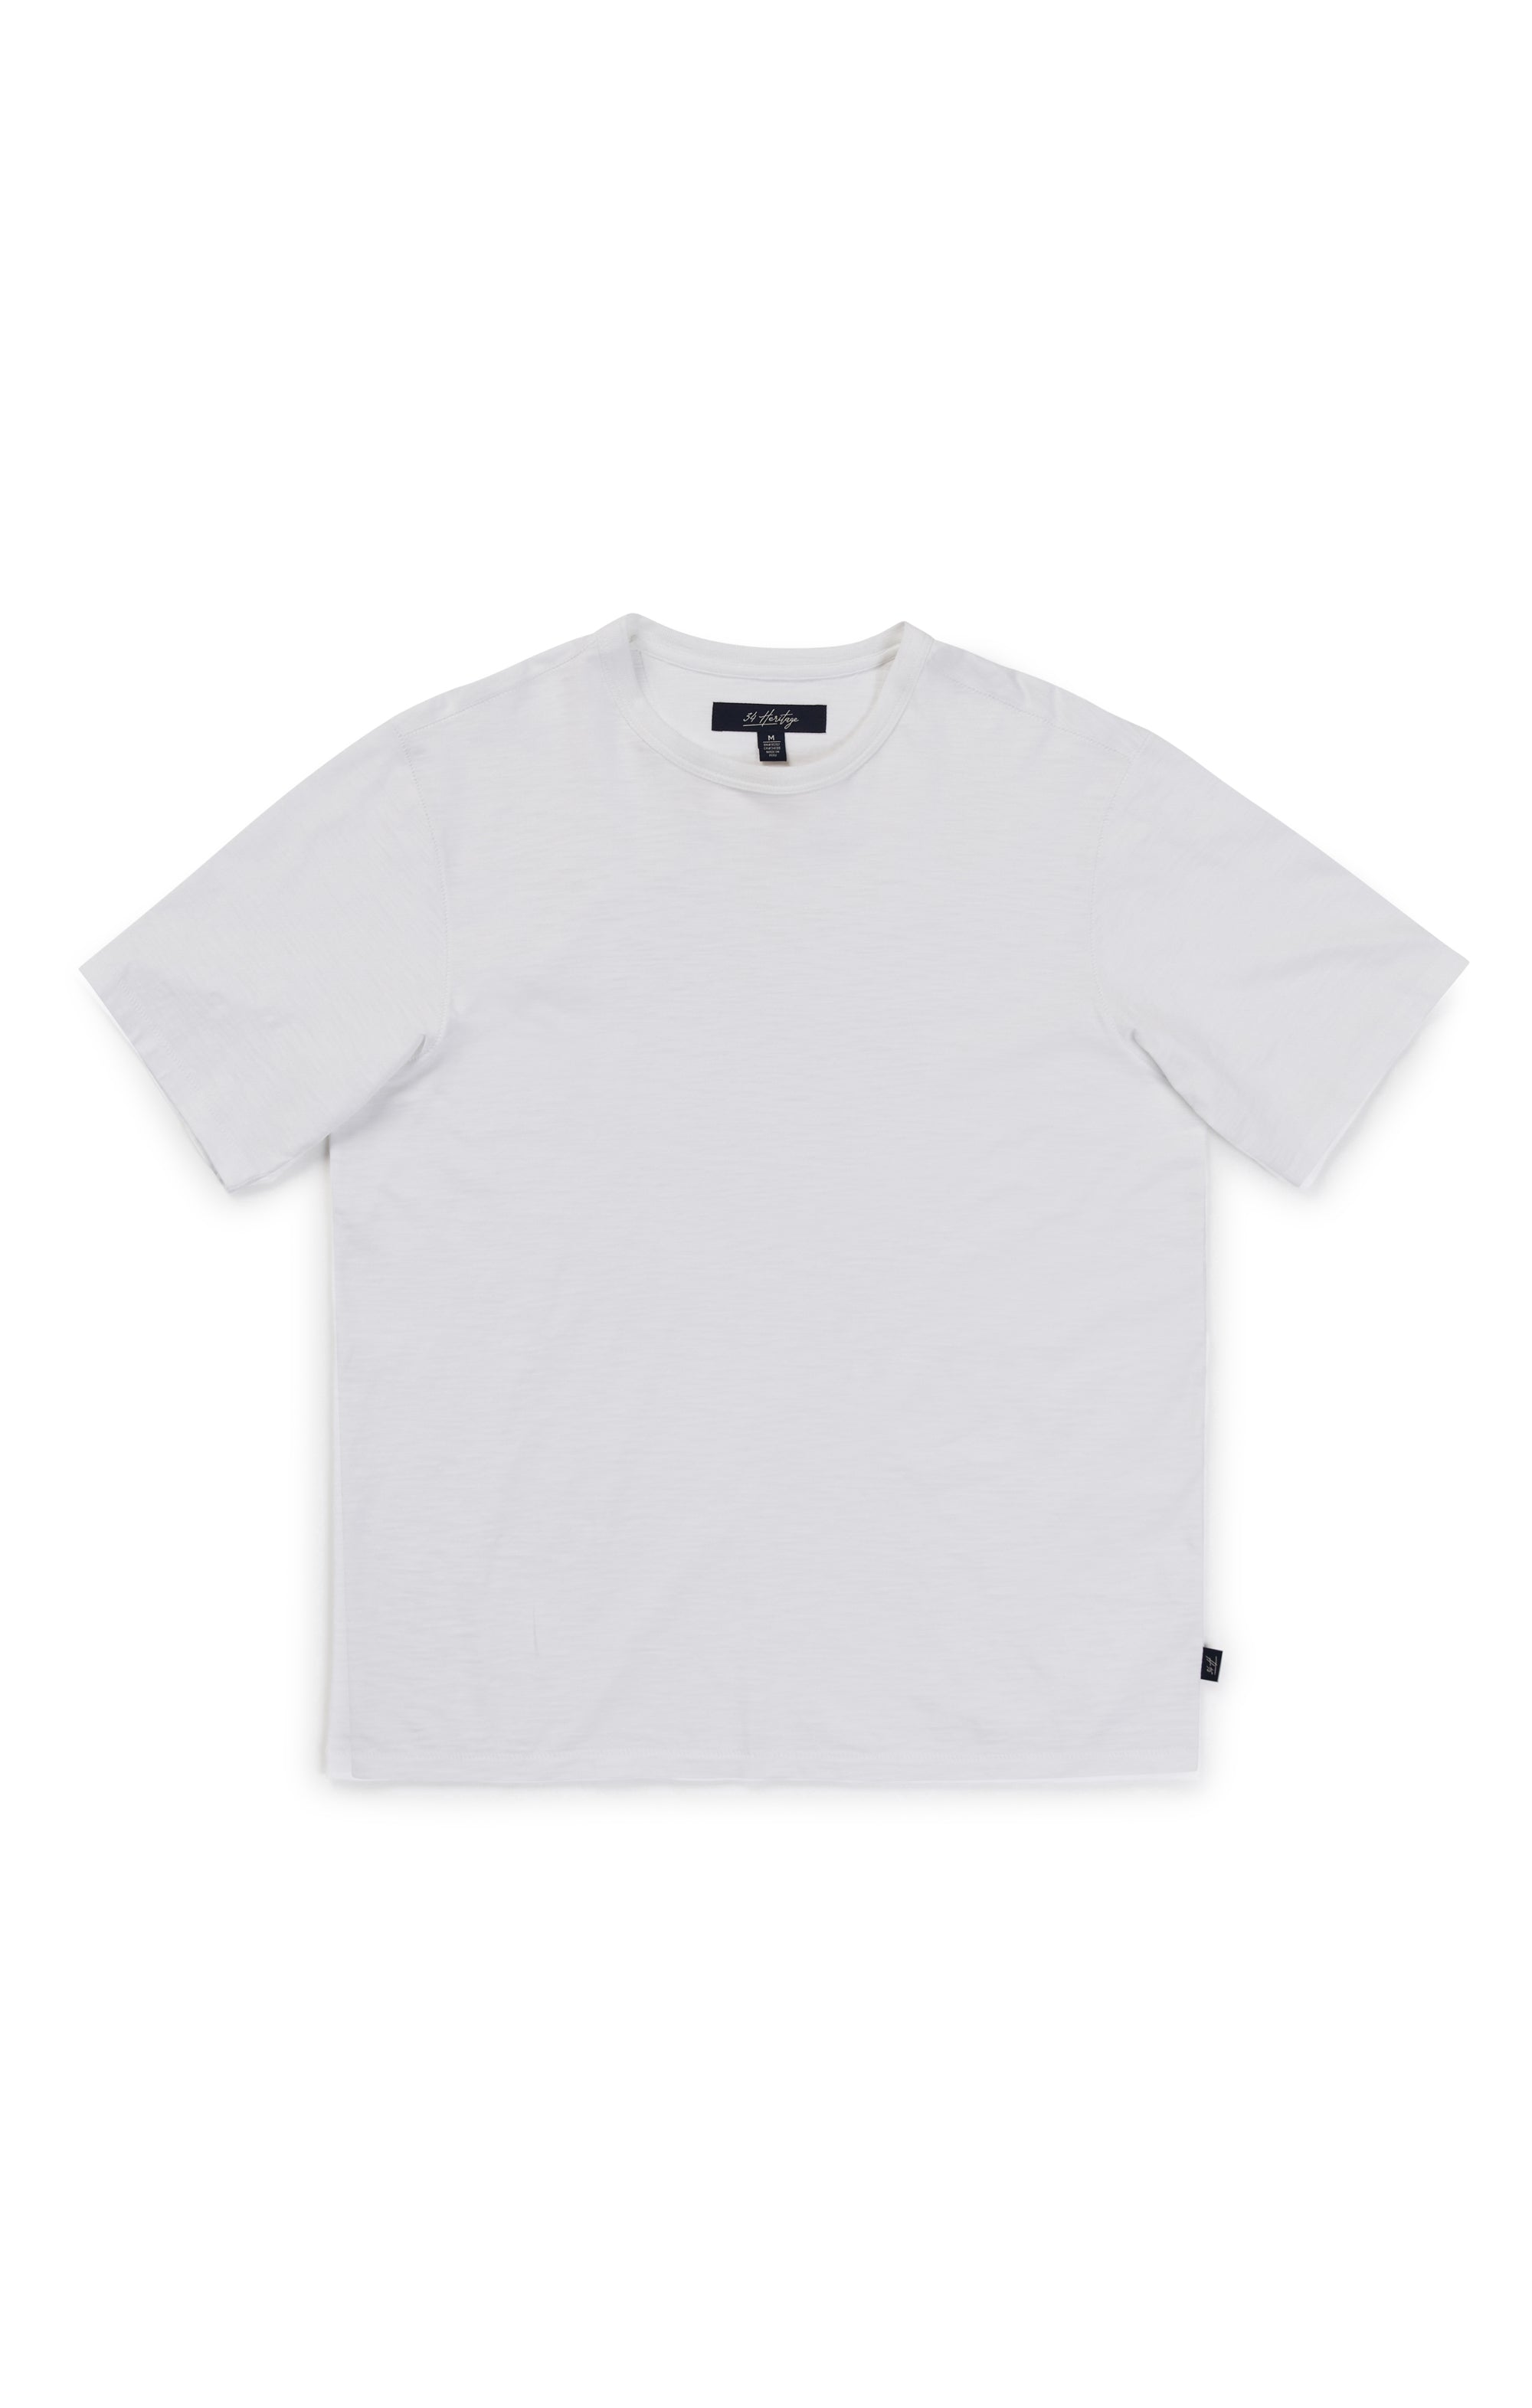 Slub Crew Neck T-Shirt in White Image 8